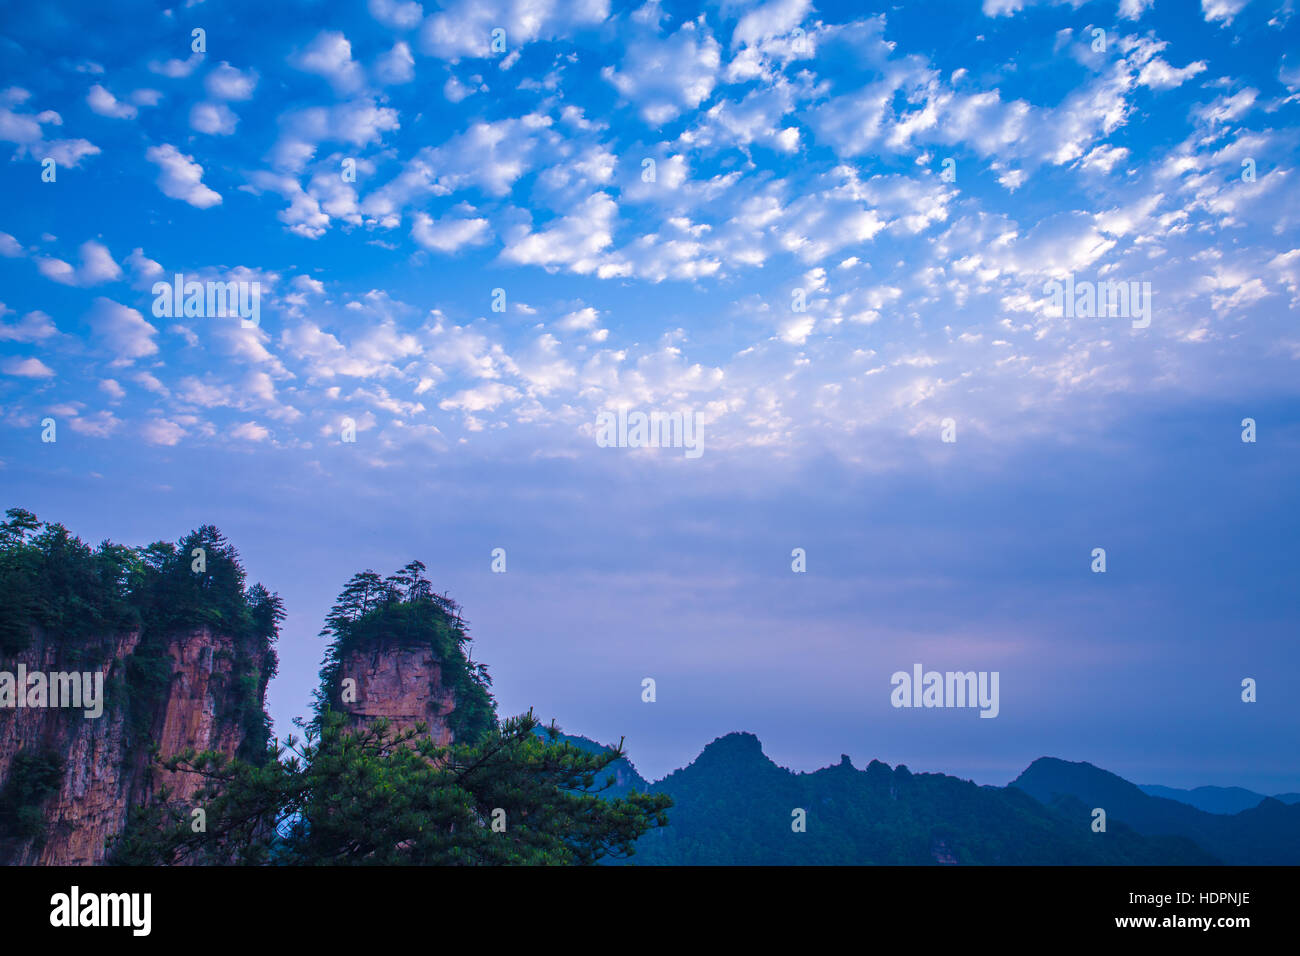 Early morning at Mountain landscape of Zhangjiajie national park,China Stock Photo